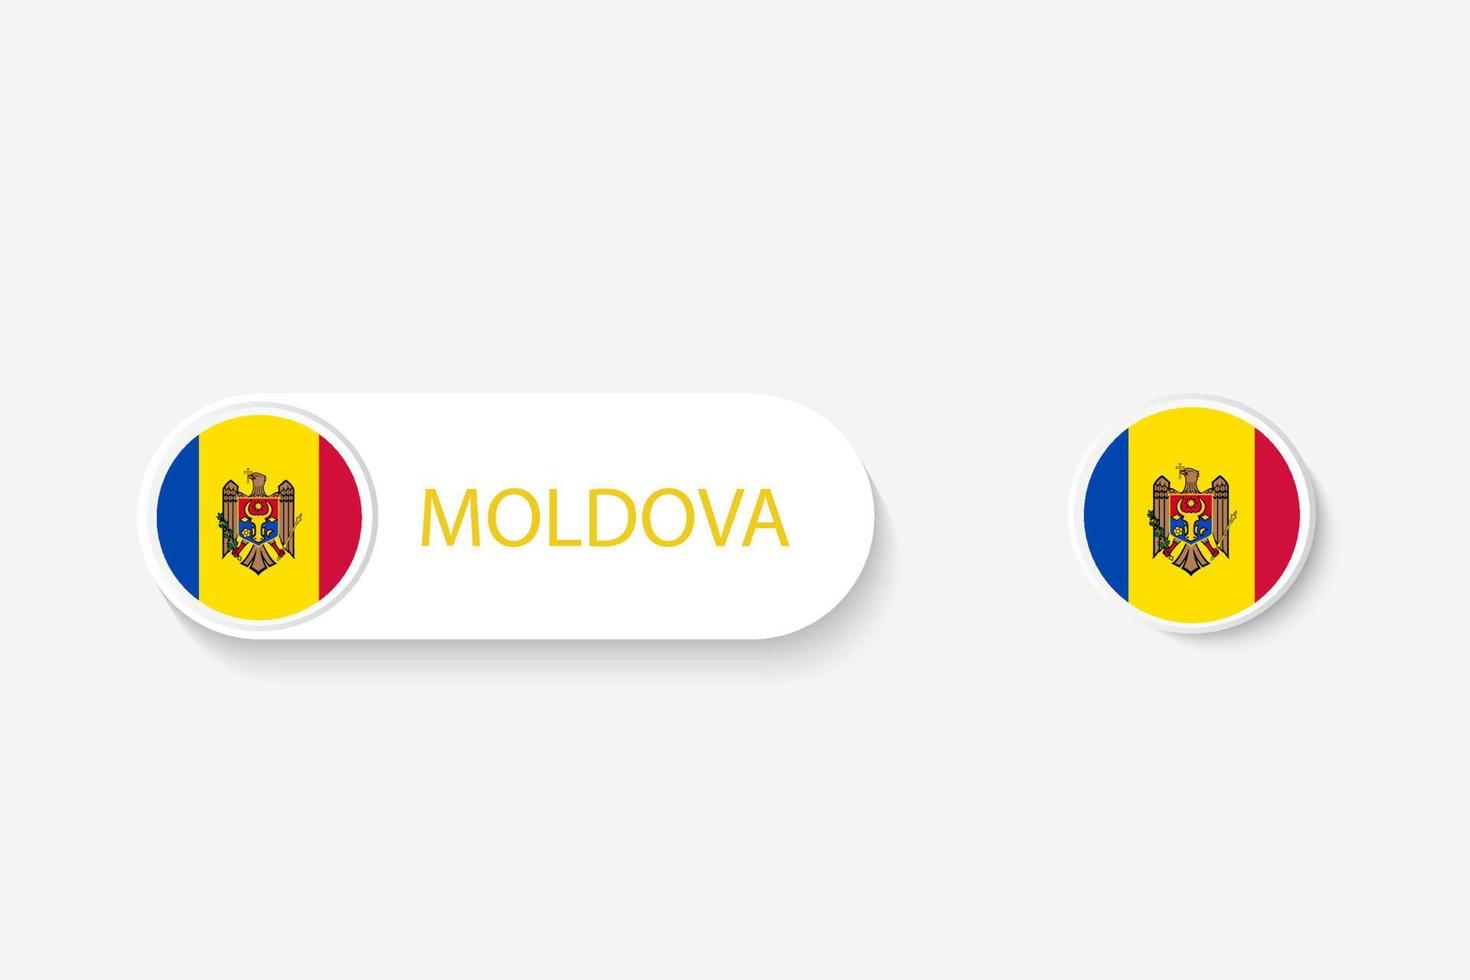 Moldova button flag in illustration of oval shaped with word of Moldova. And button flag Moldova. vector